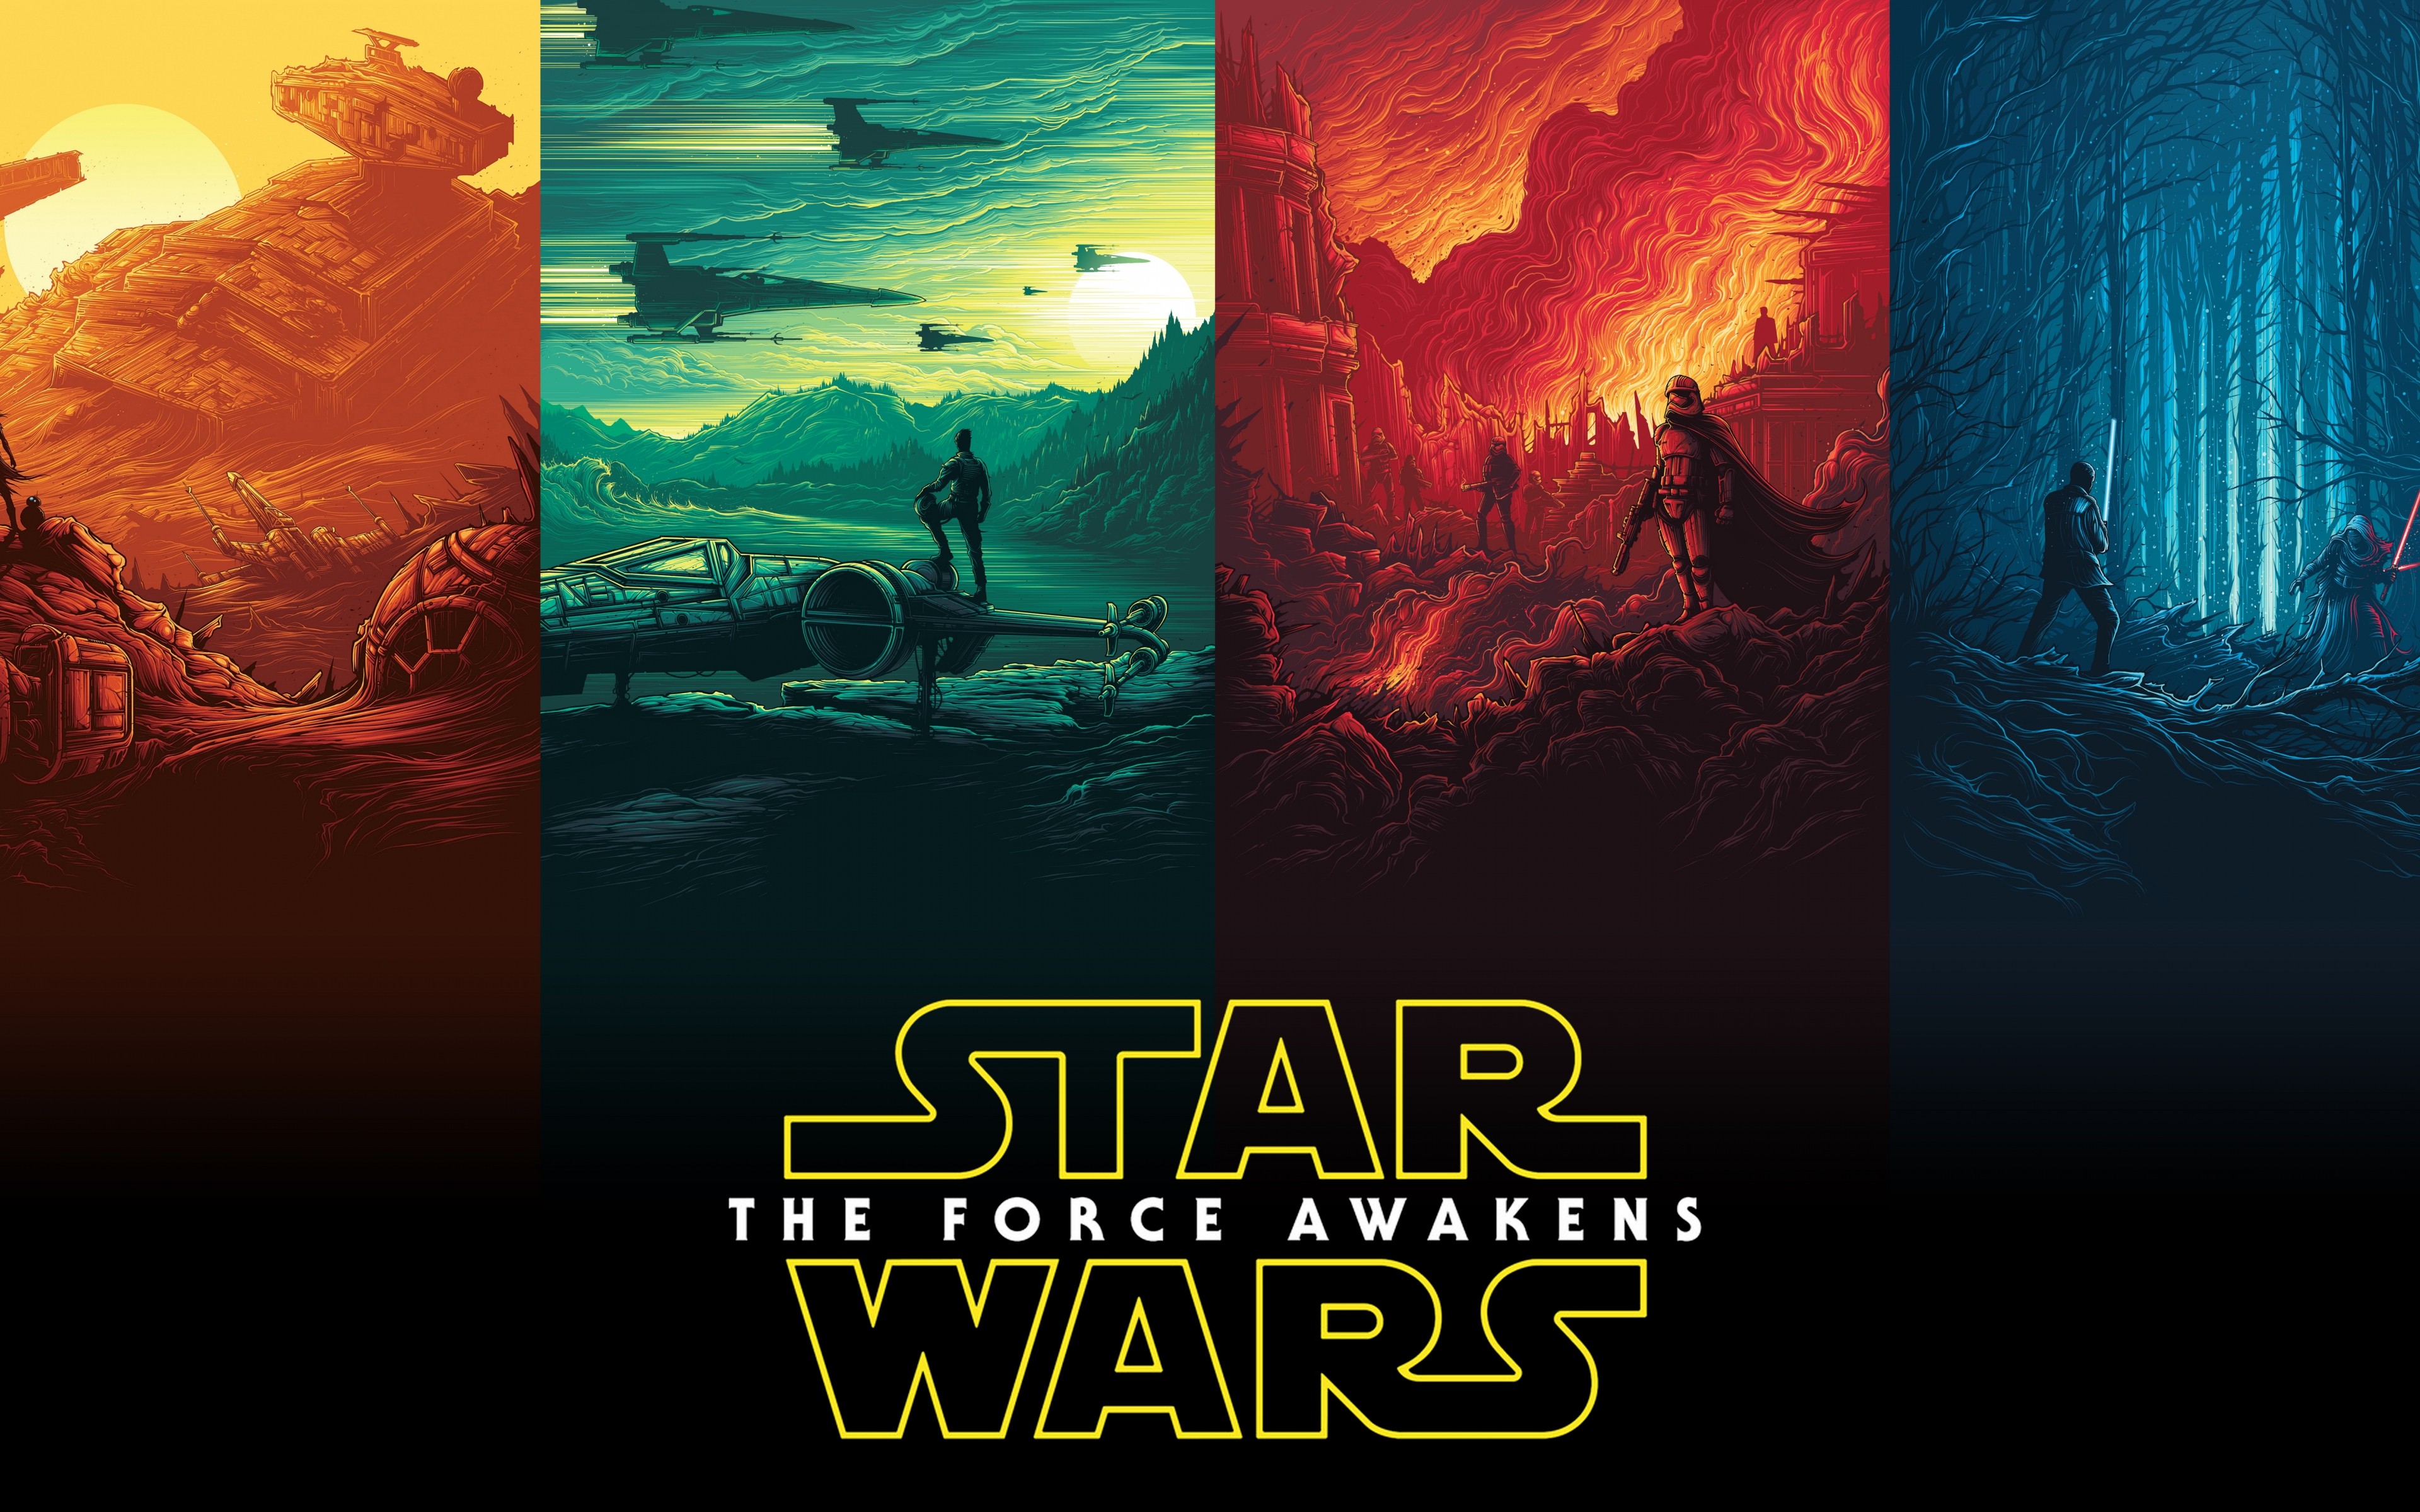 Rey Finn Kylo Ren Han Solo Luke Skywalker Star Wars 4K Wallpaper 3840x2400 Hot Desktop and background for your PC and mobile